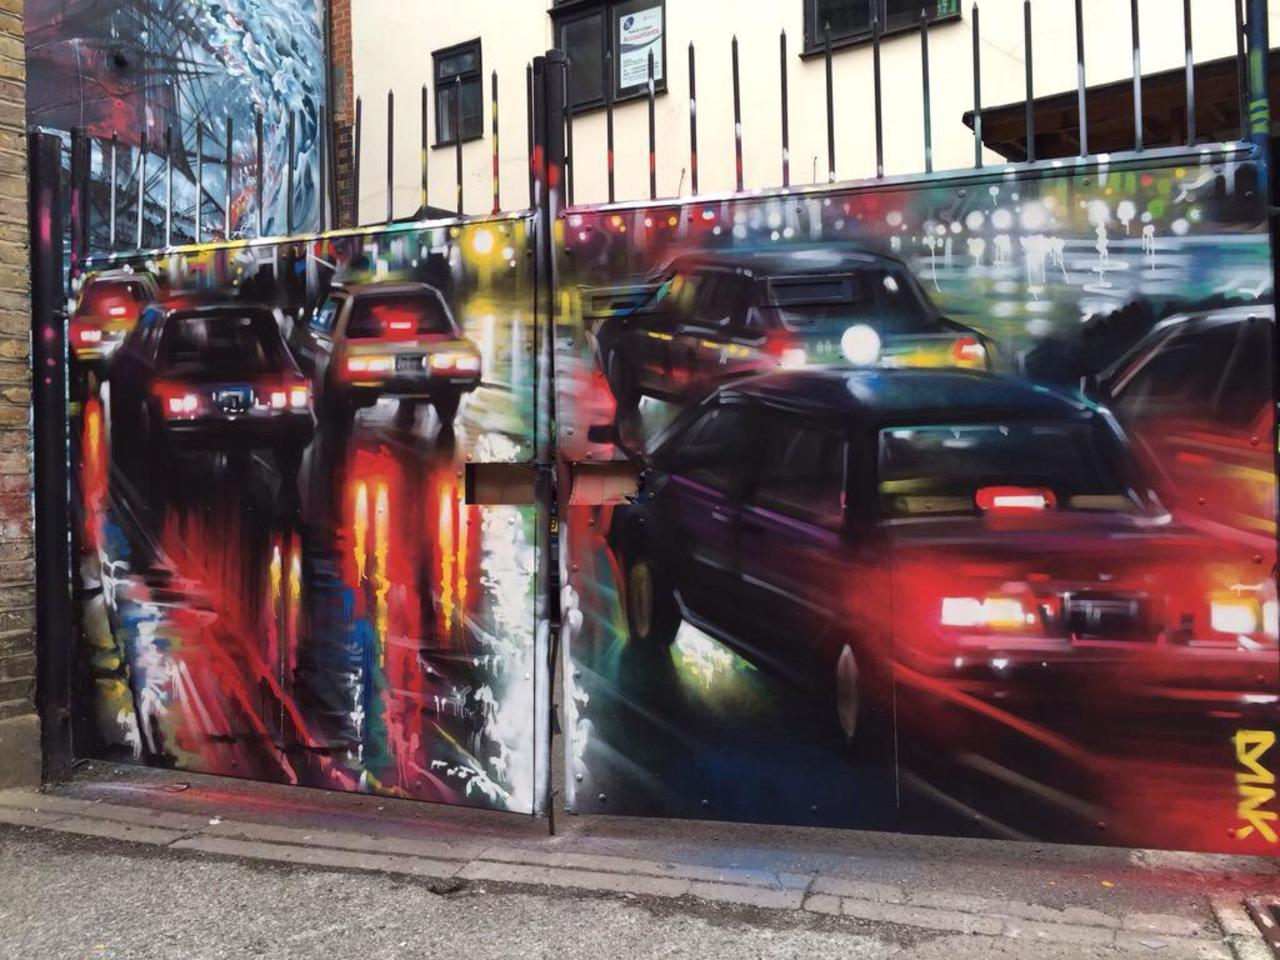 New Street Art by DanKitchener in Brick Lane London 

#art #graffiti #mural #streetart http://t.co/OWNjectZ9R